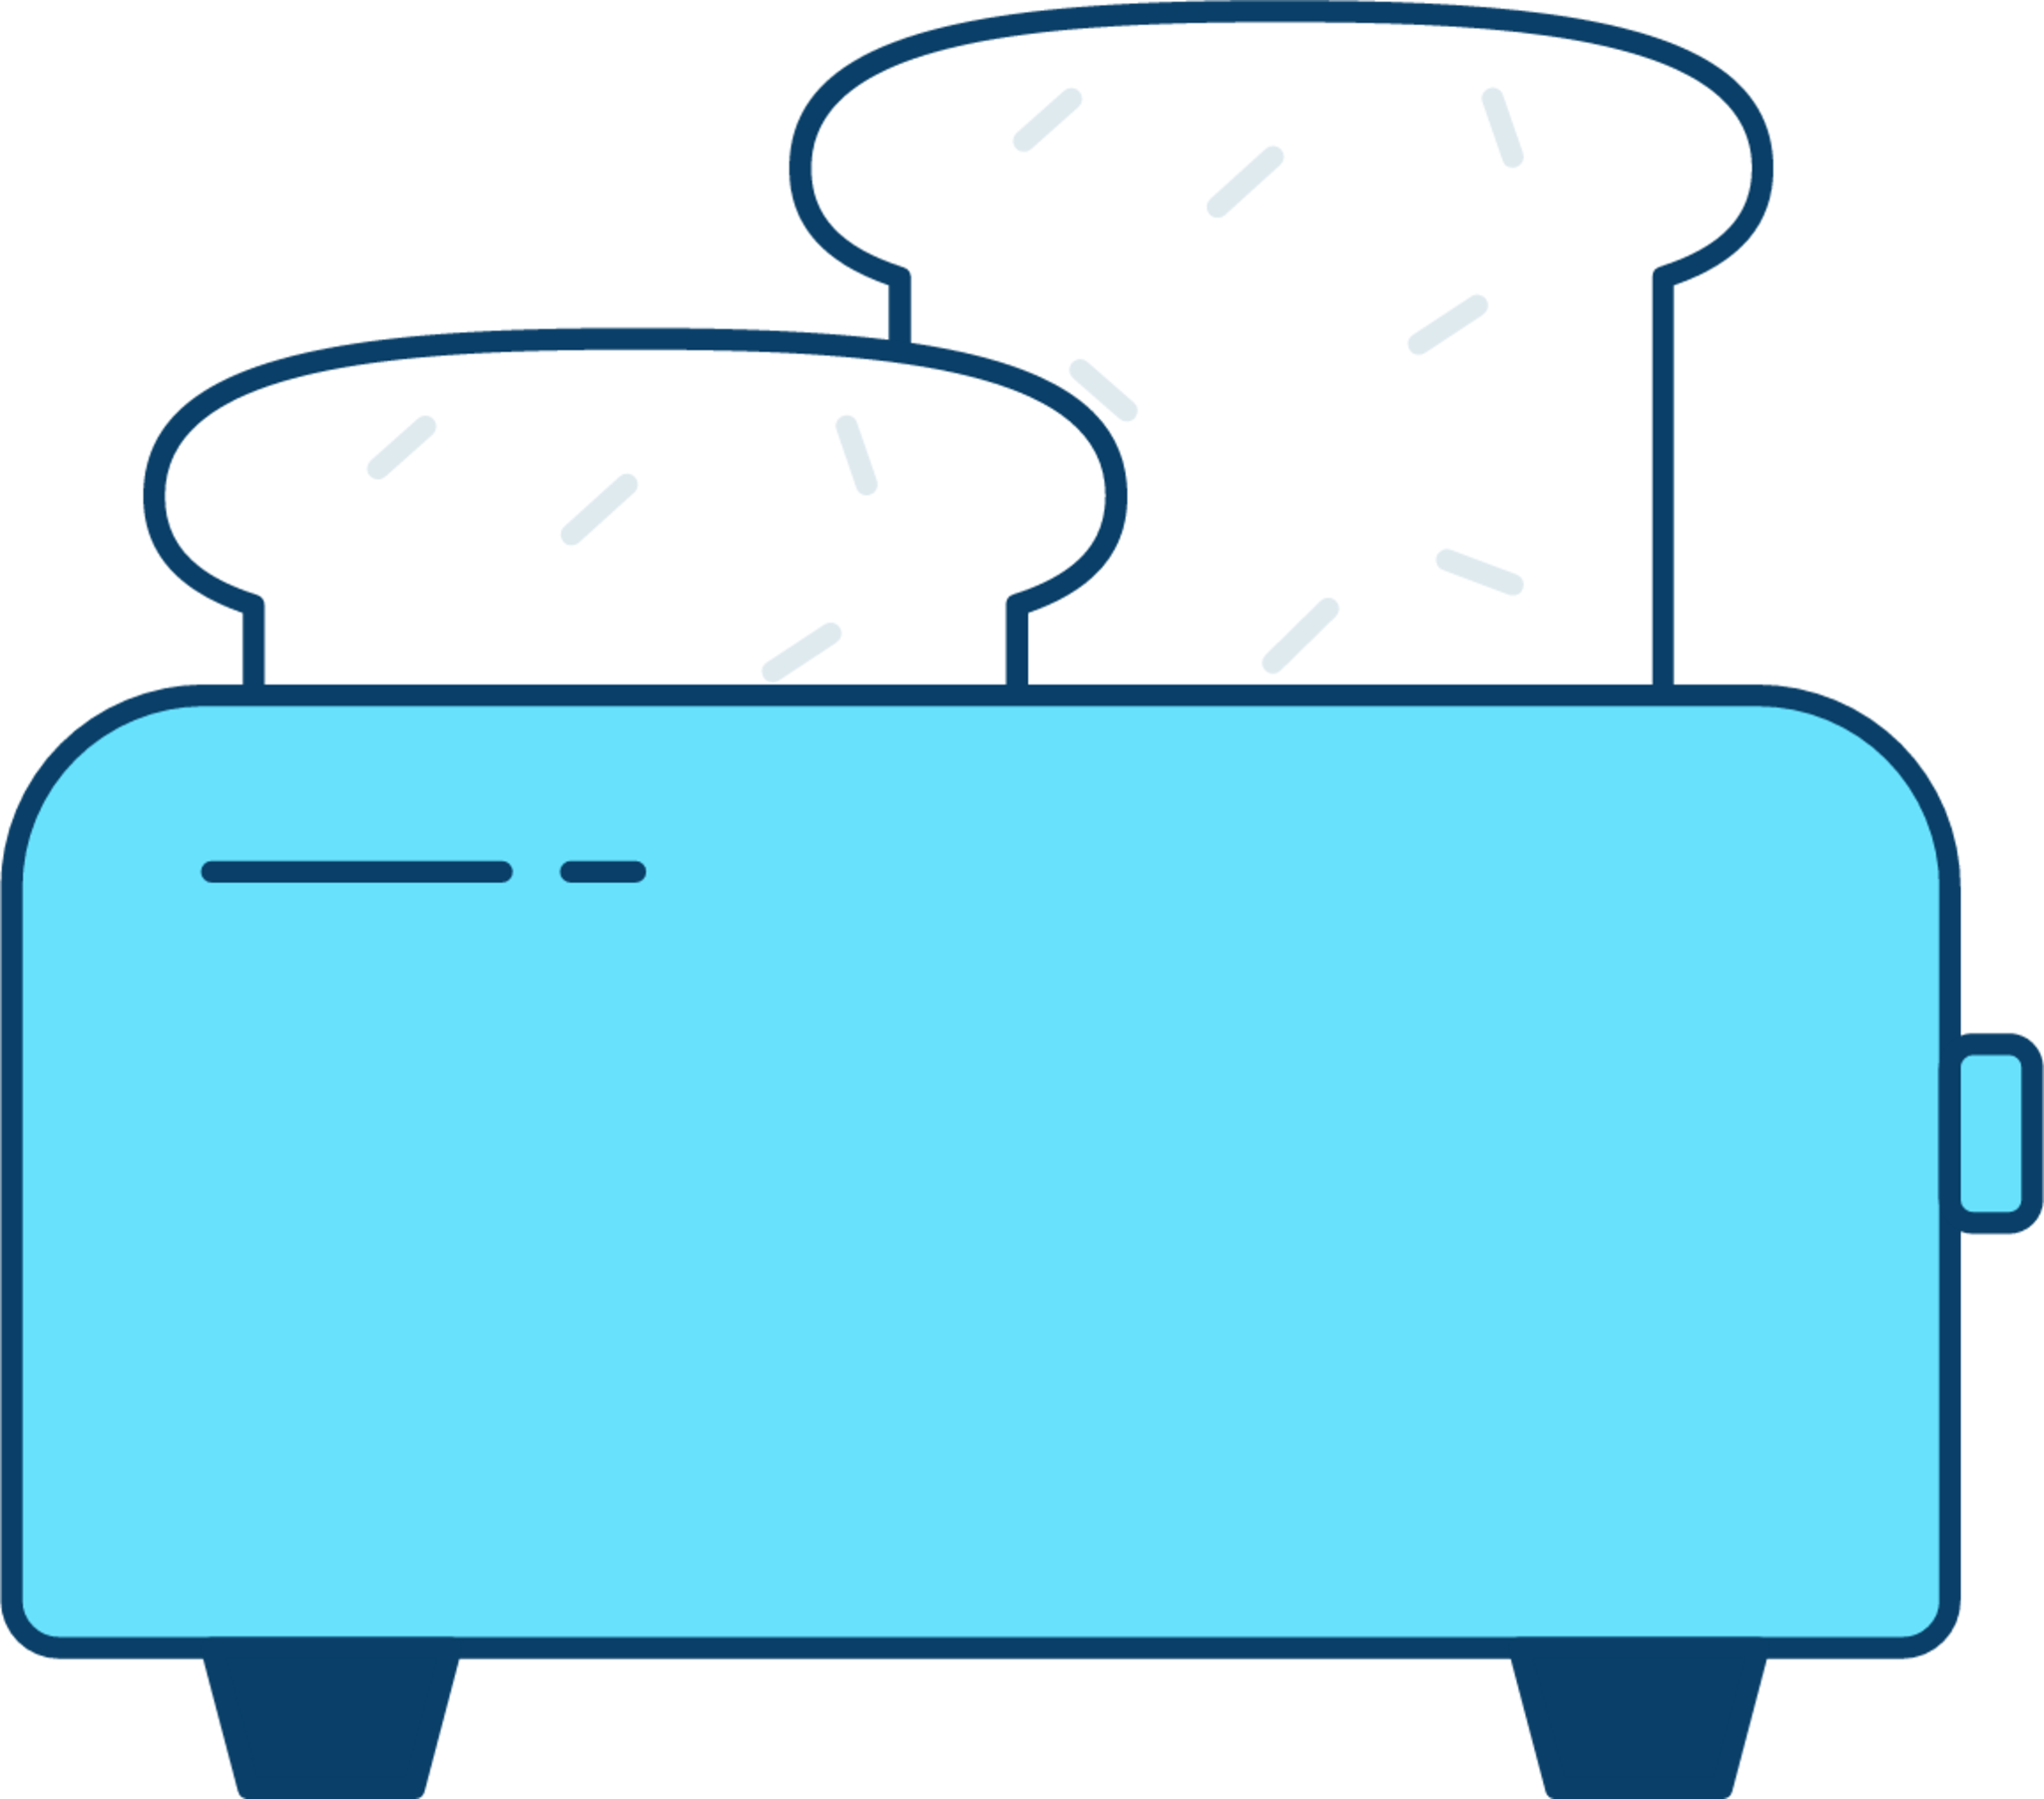 Toast illustration